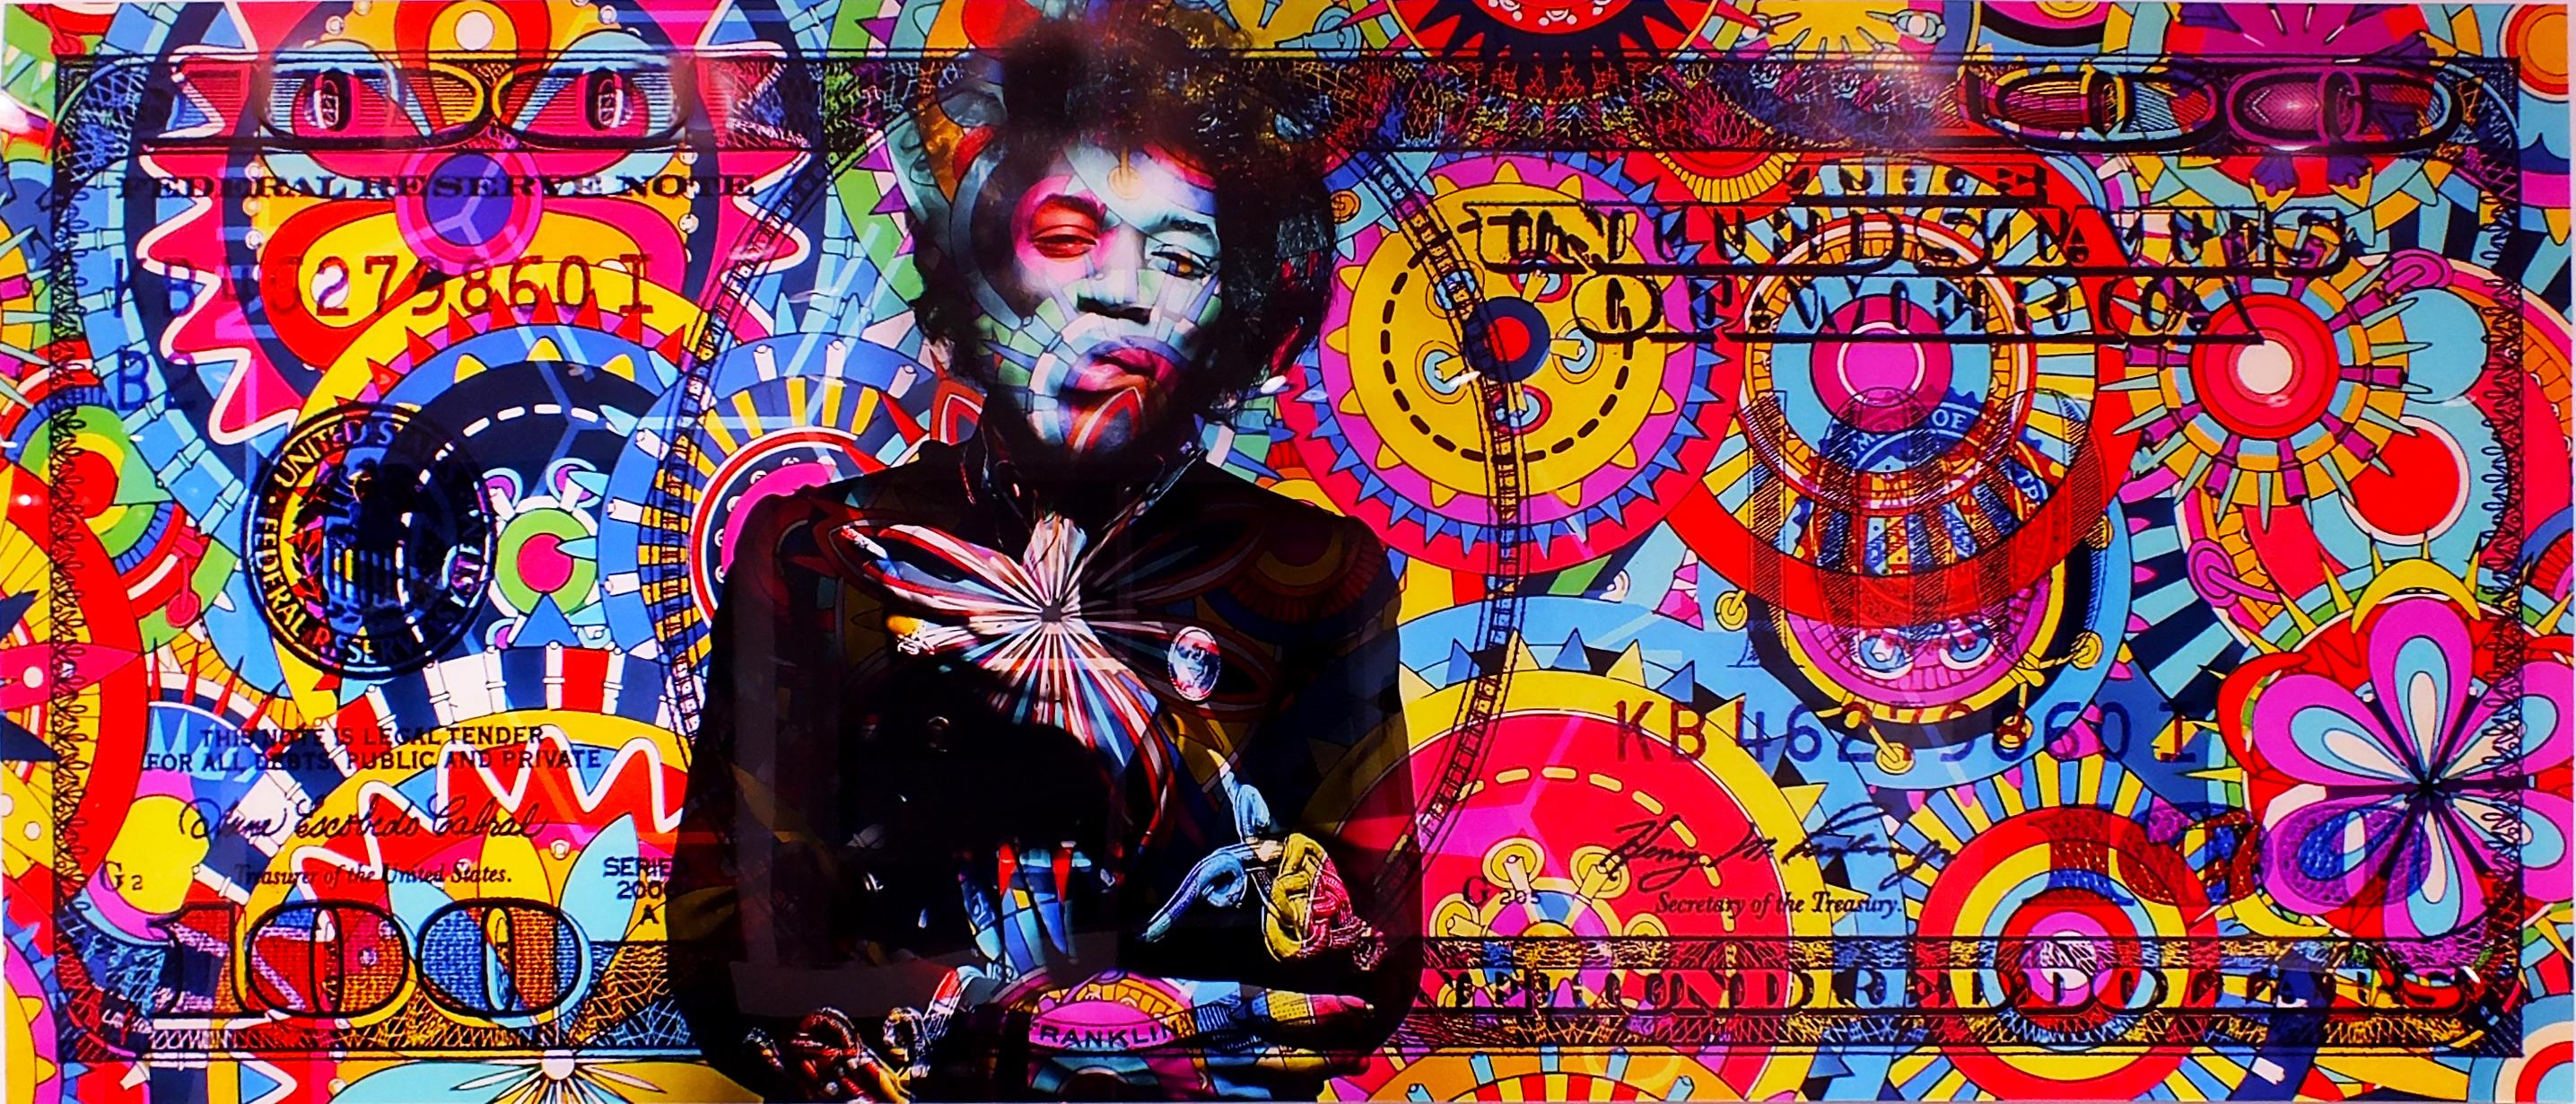 Hendrix Cash Culture, Acrylic on Giclee - Mixed Media Art by SQRA